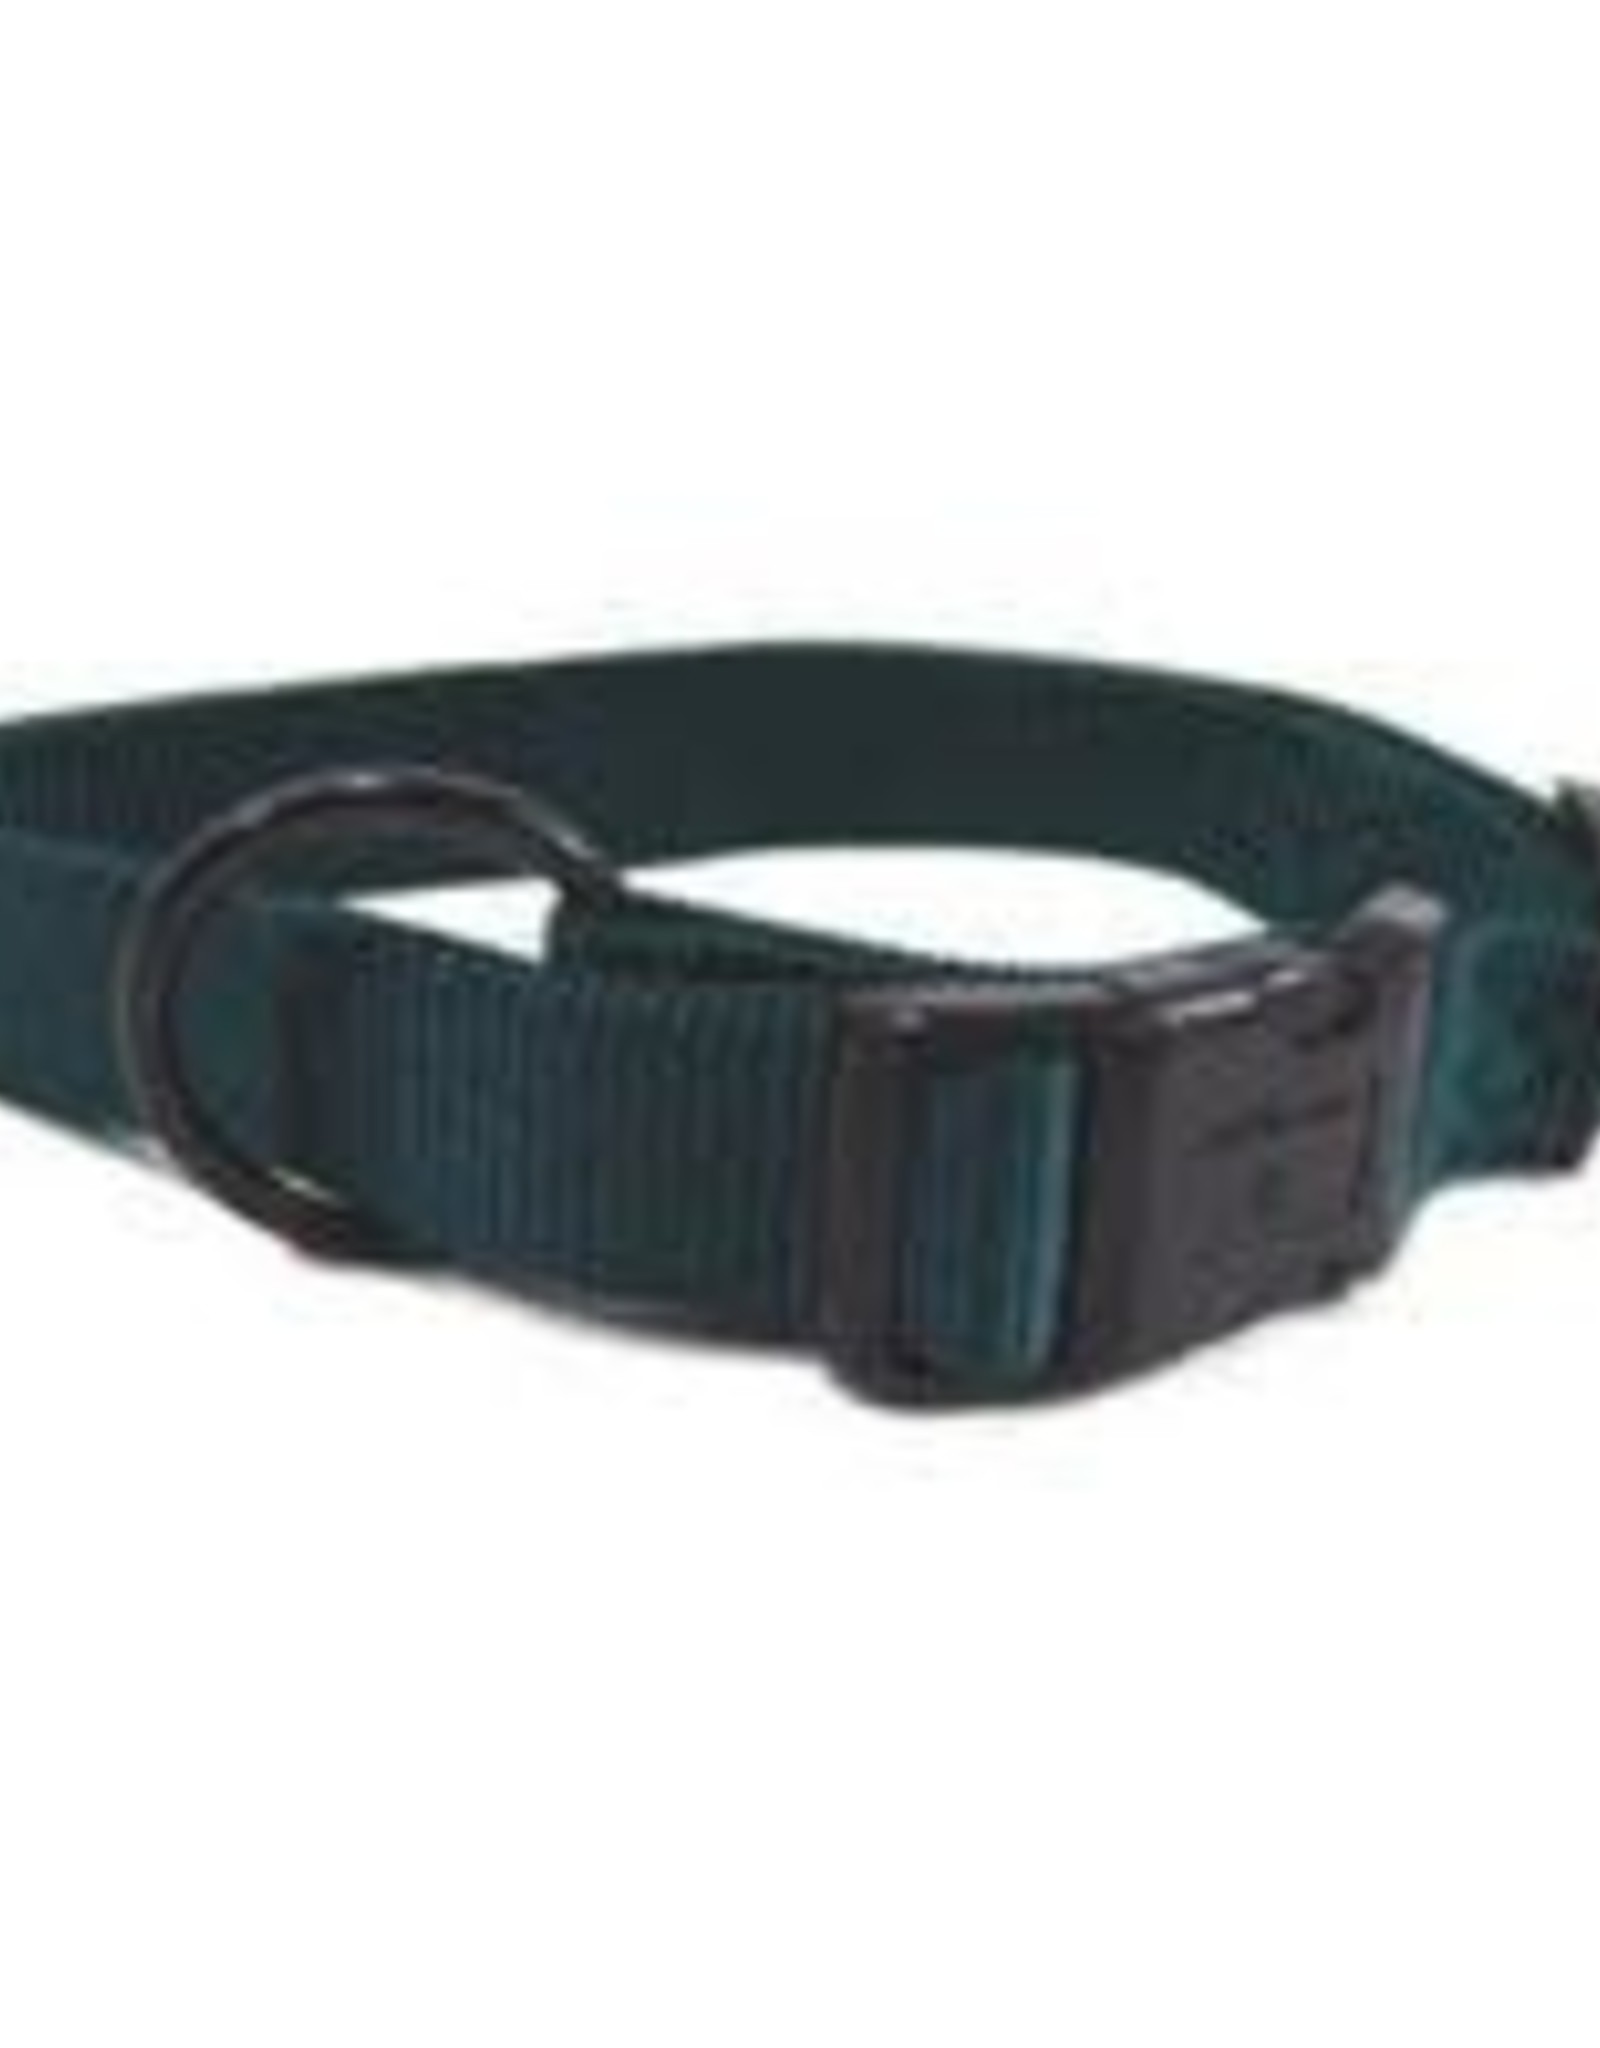 Hamilton Pet Dog Collar Adjustable 1"  18-26" Dark Green DISC